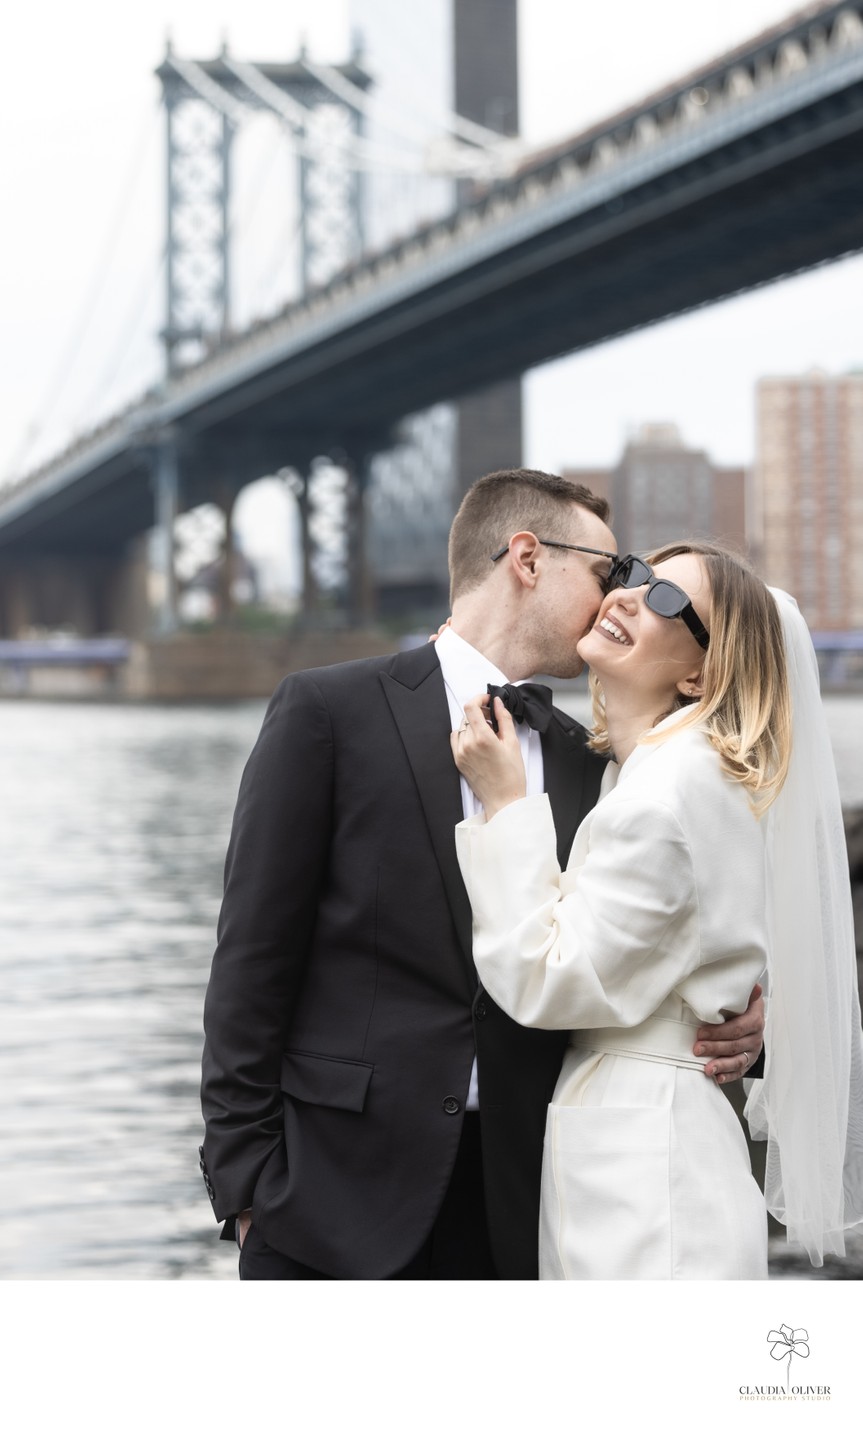 Elopement Photographers NYC: Brooklyn Bridge wedding